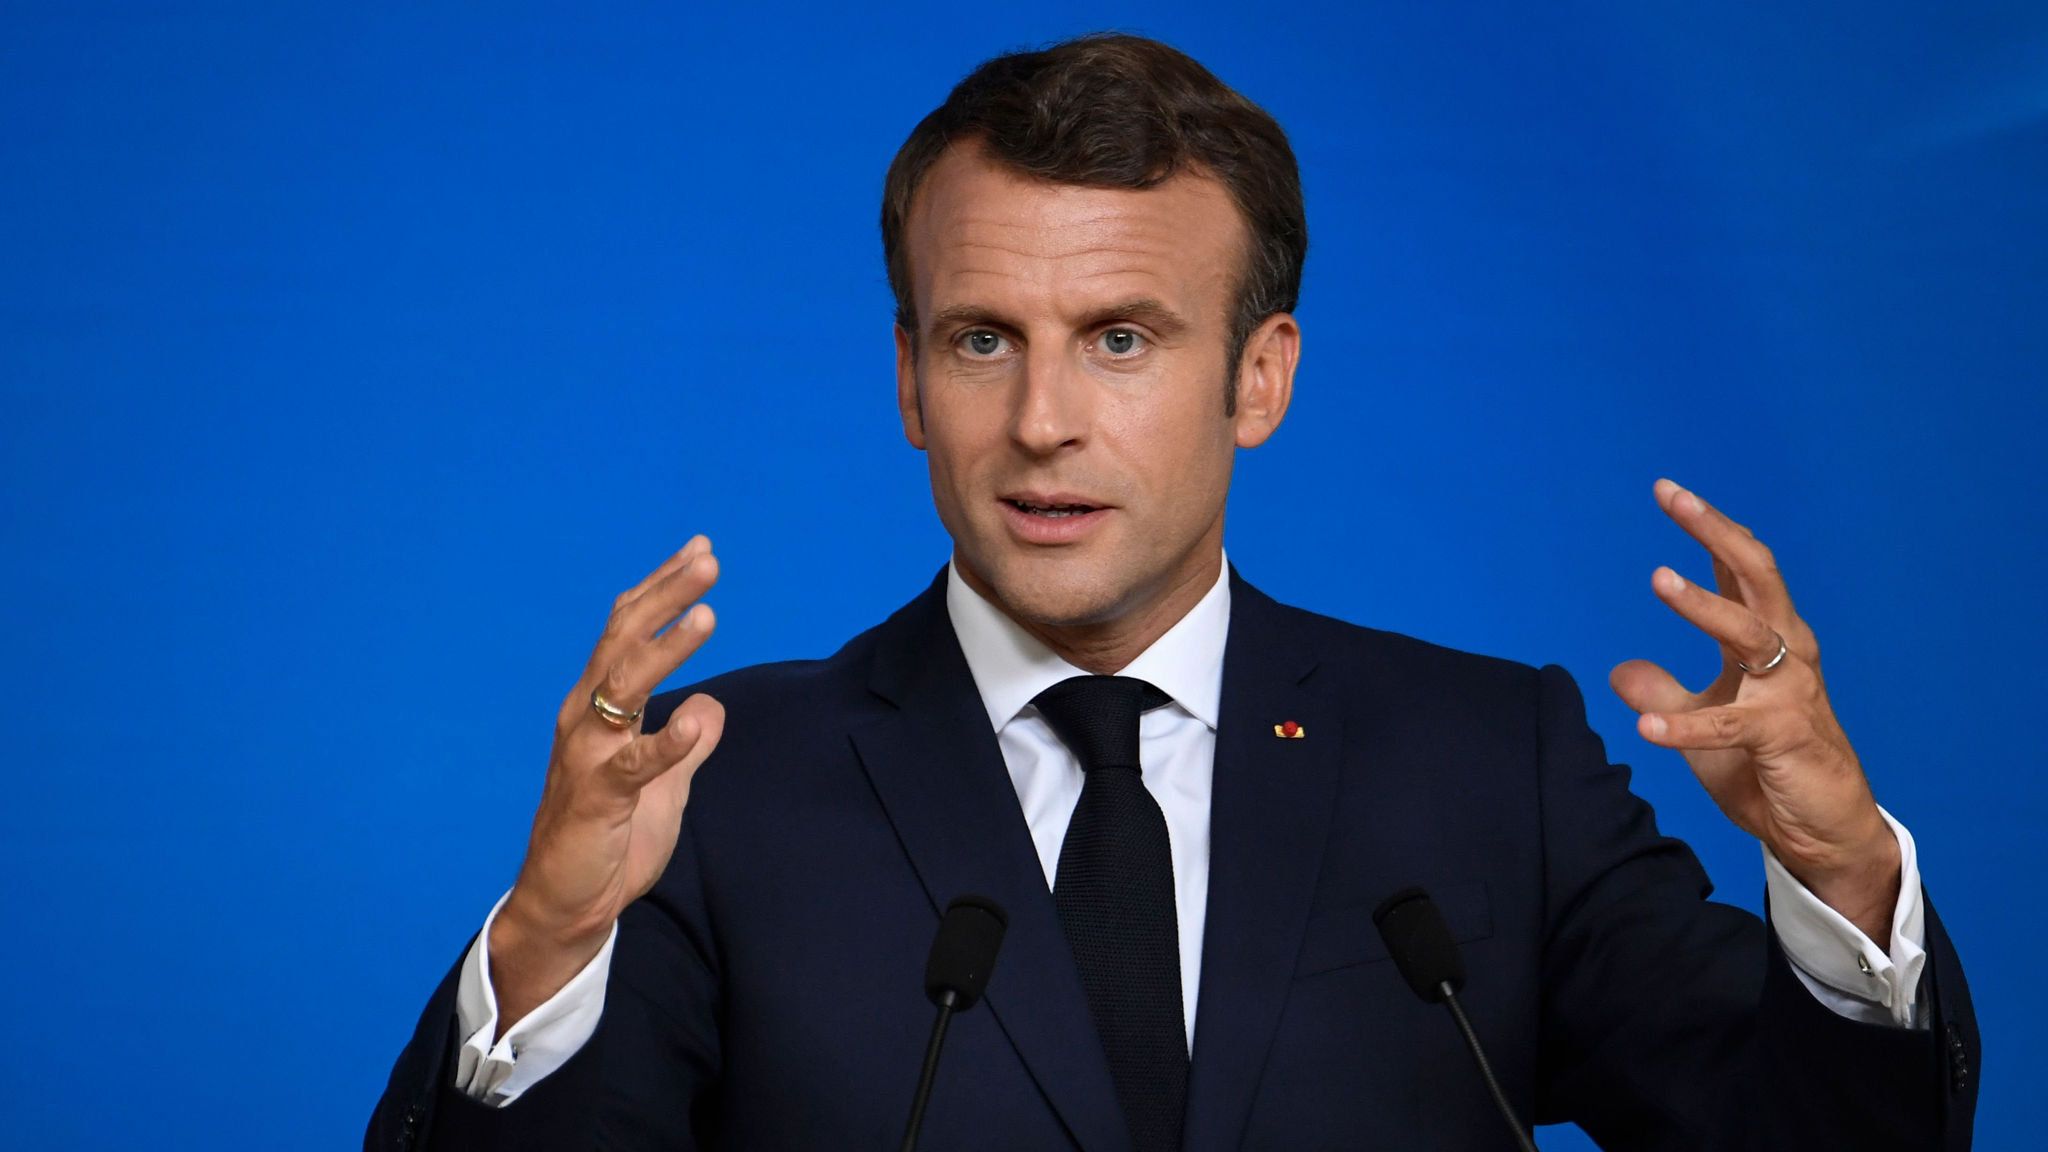 Emmanuel Macron snatches political victory from EU jobs talks